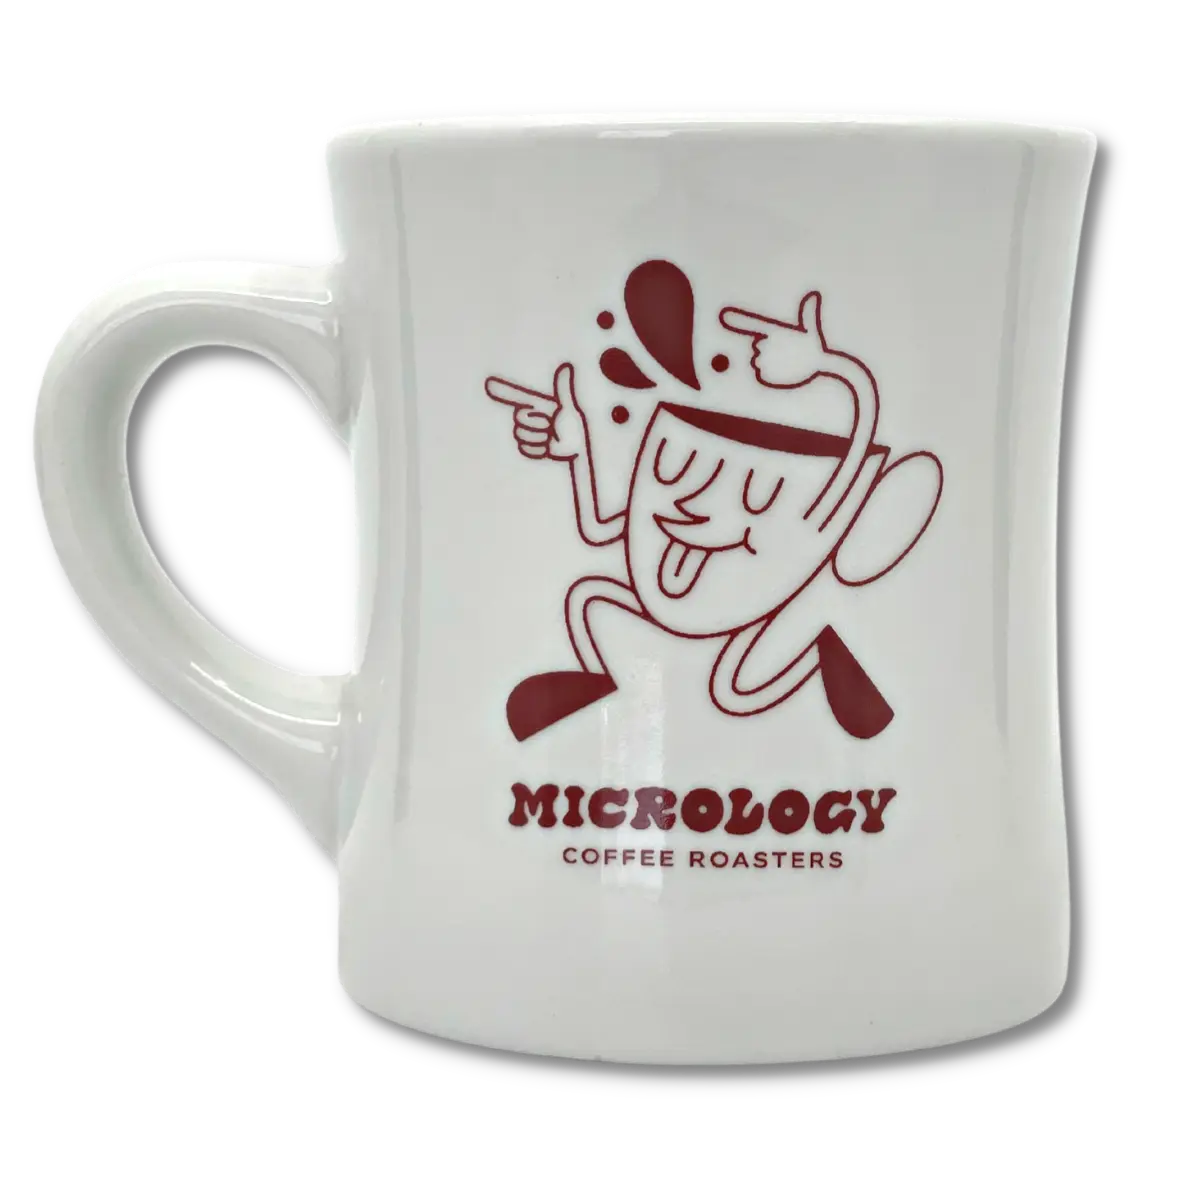 WCBR Diner Mug Micrology Coffee